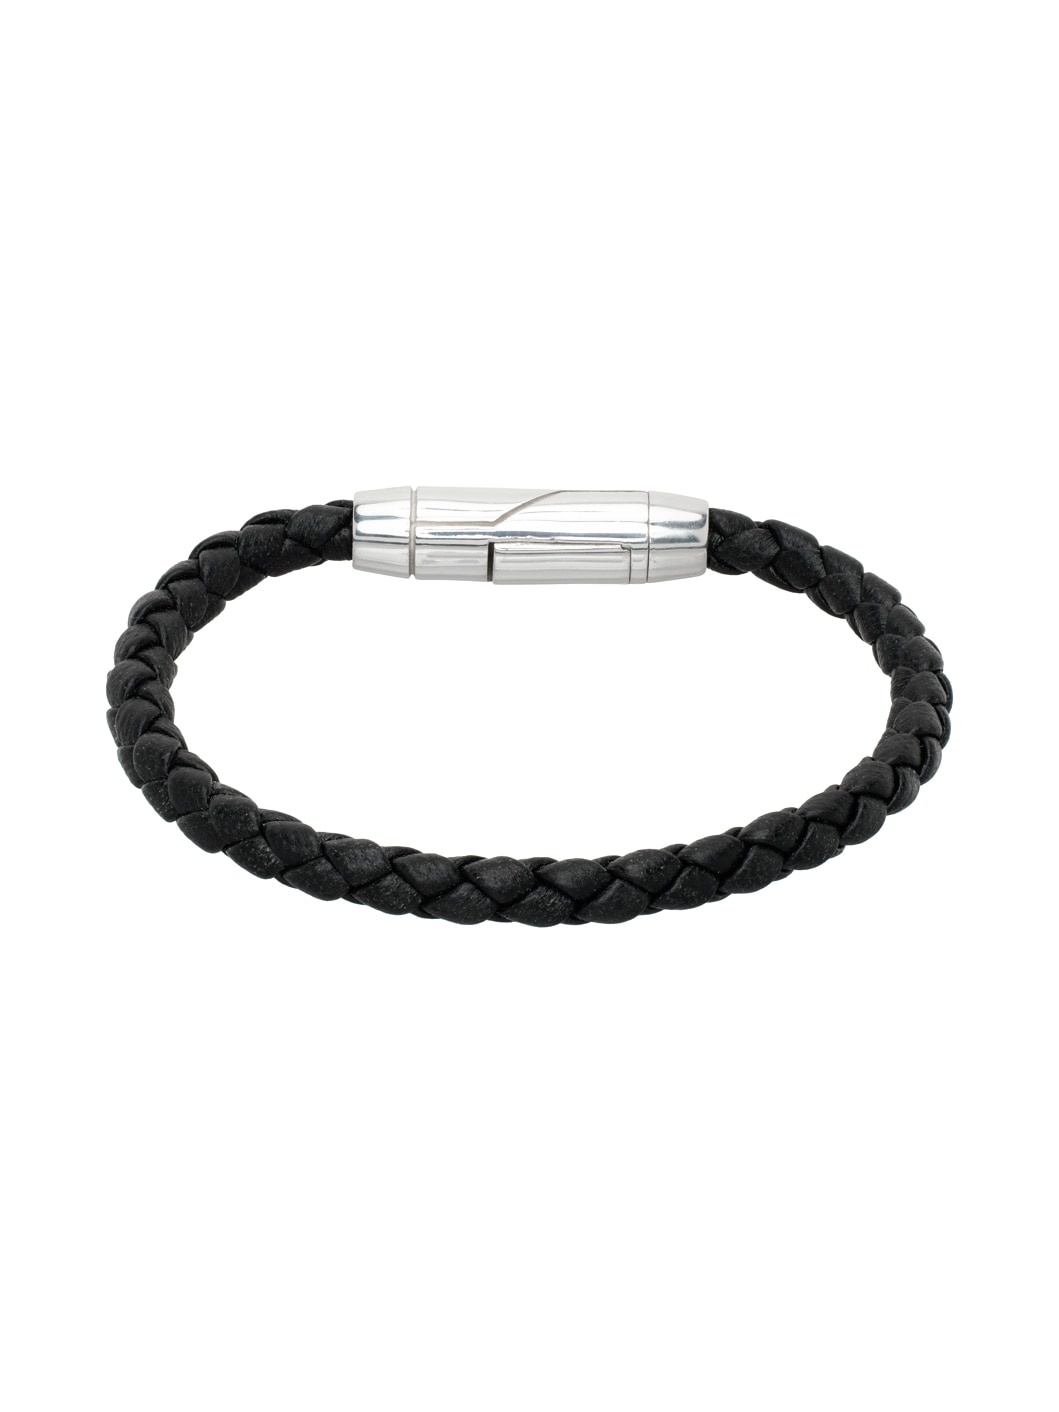 Black Braid Leather Bracelet - 2